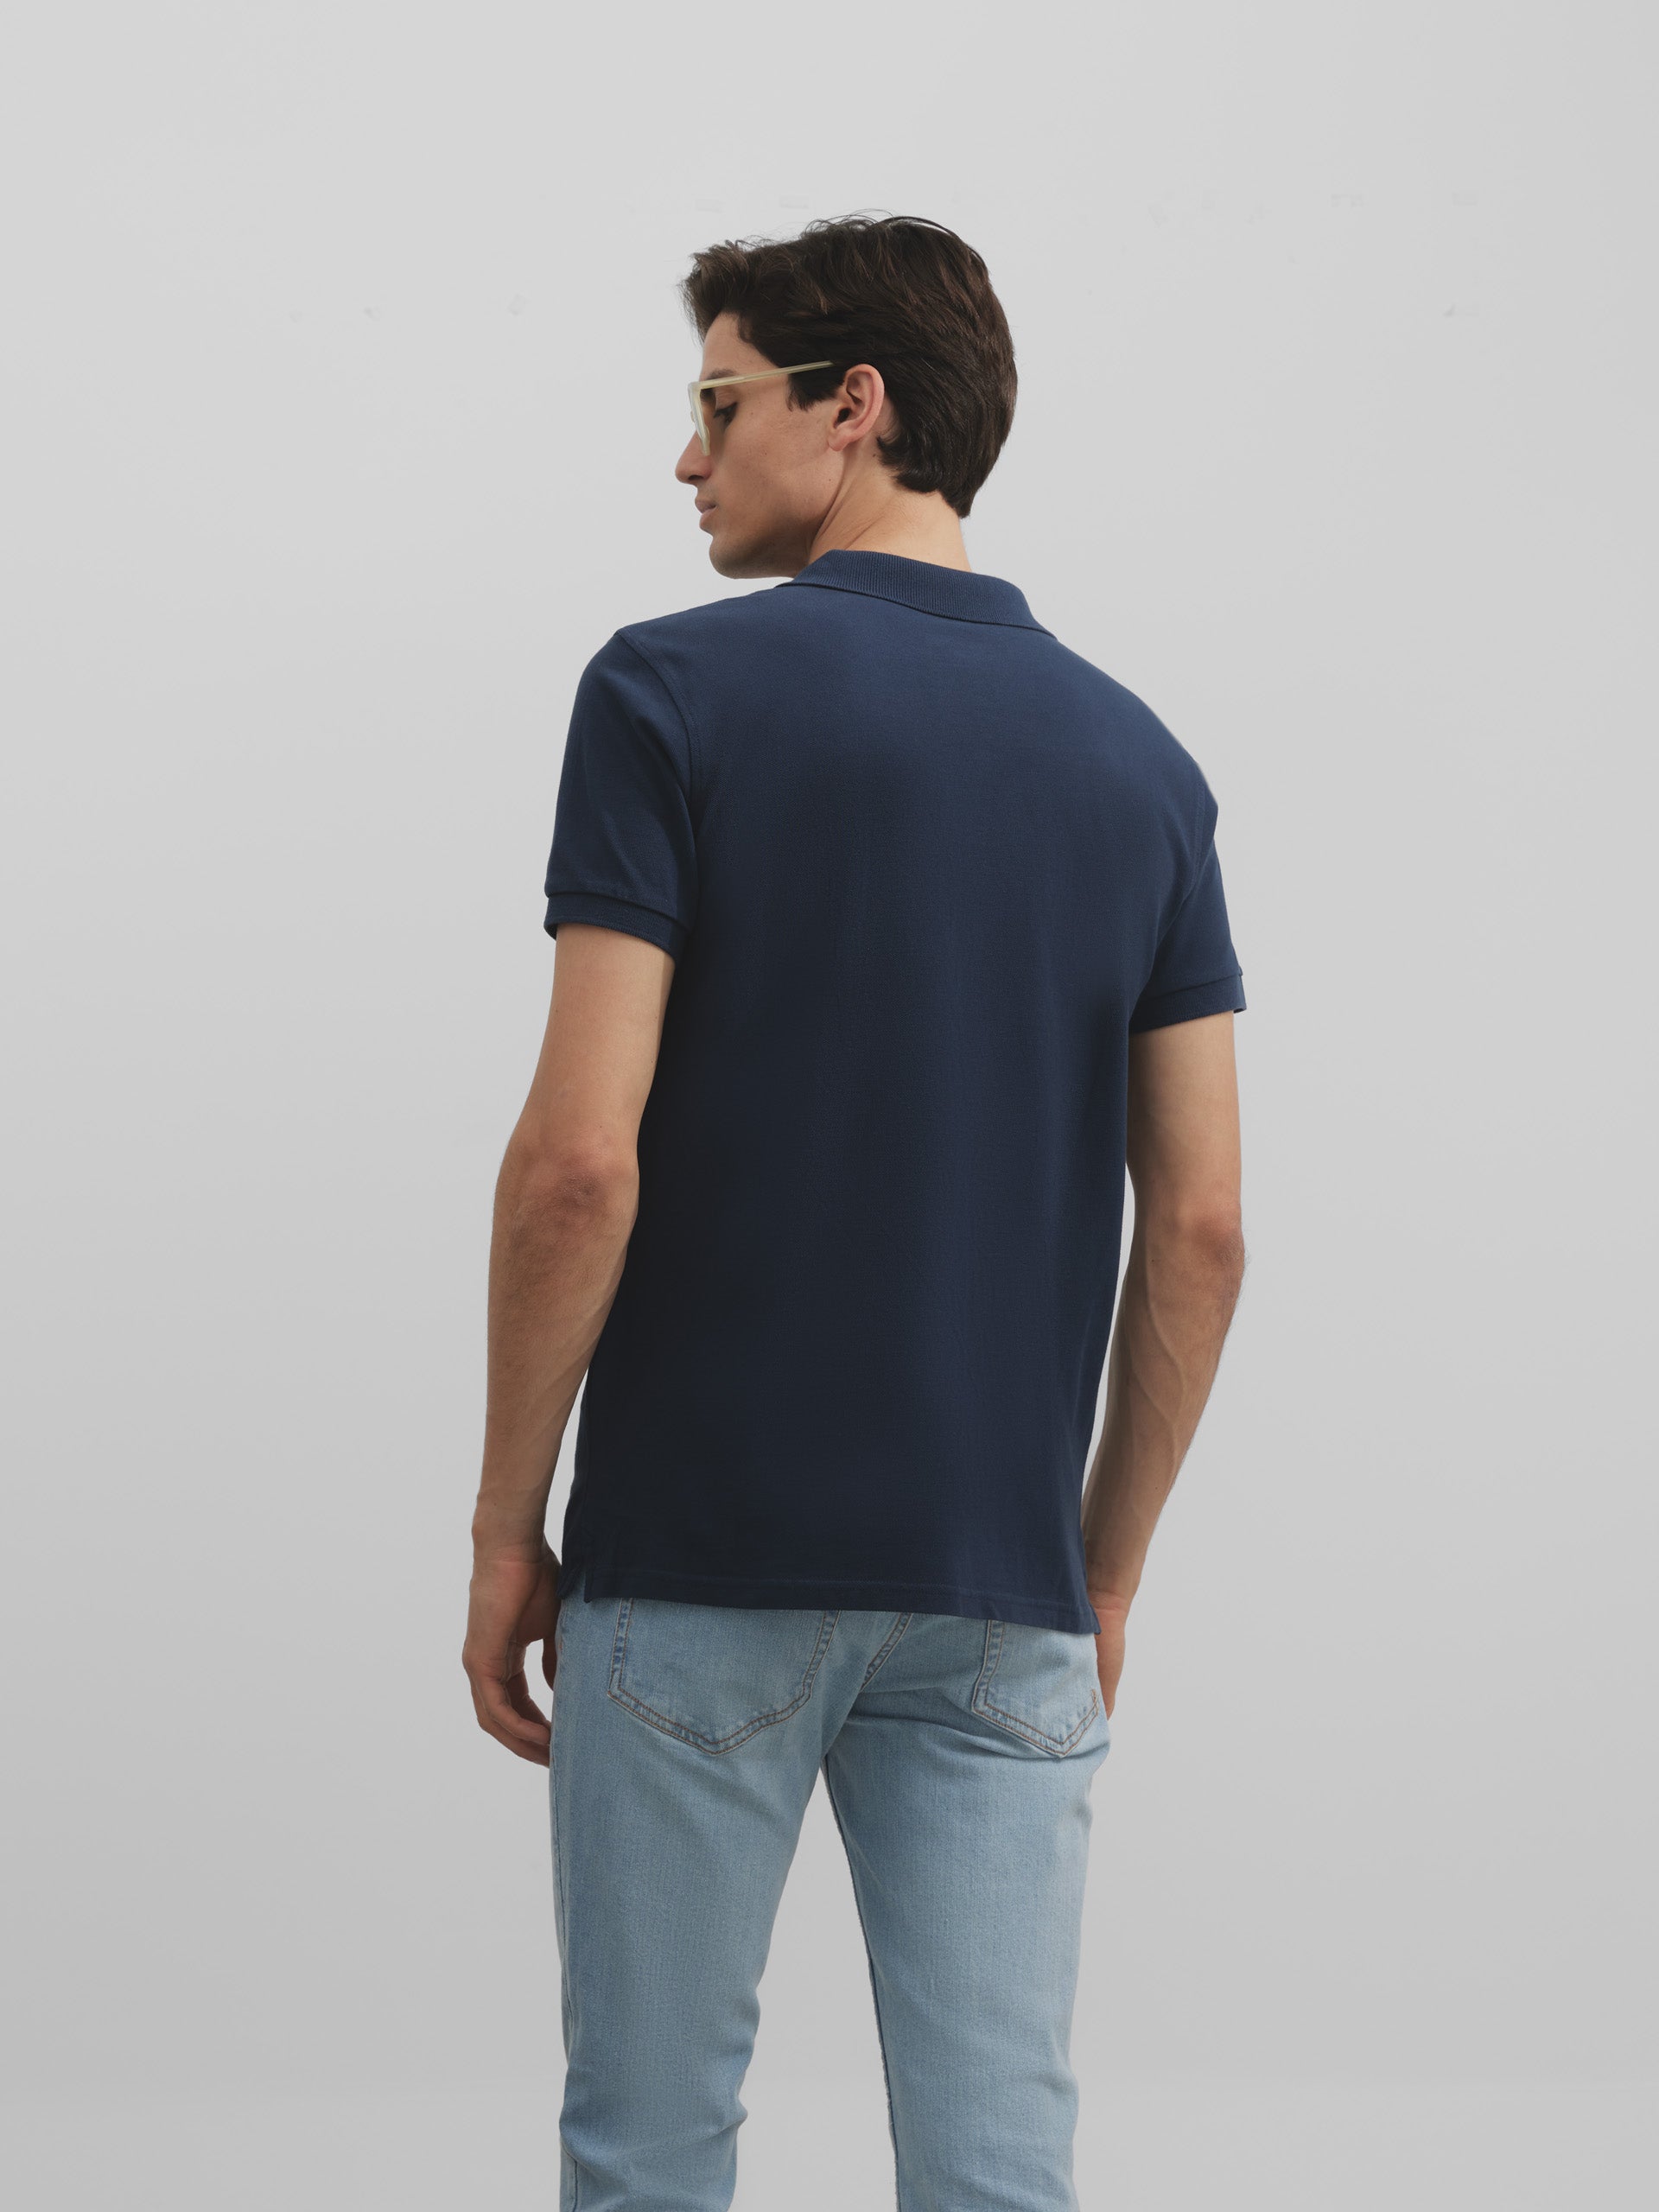 Medium navy blue plain logo polo shirt